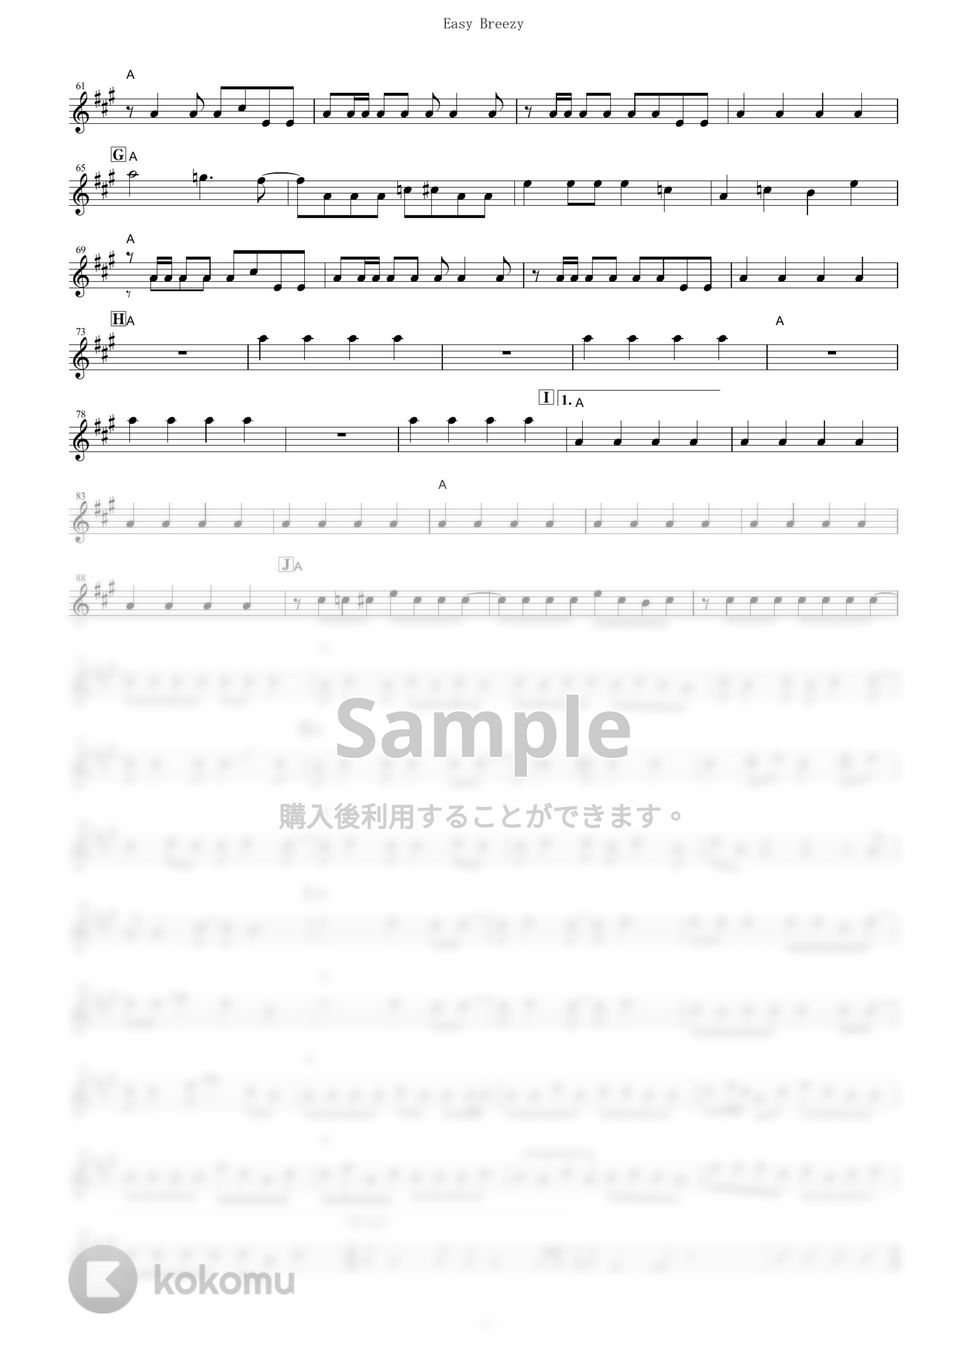 chelmico - Easy Breezy (『映像研には手を出すな！』 / in Bb) by muta-sax